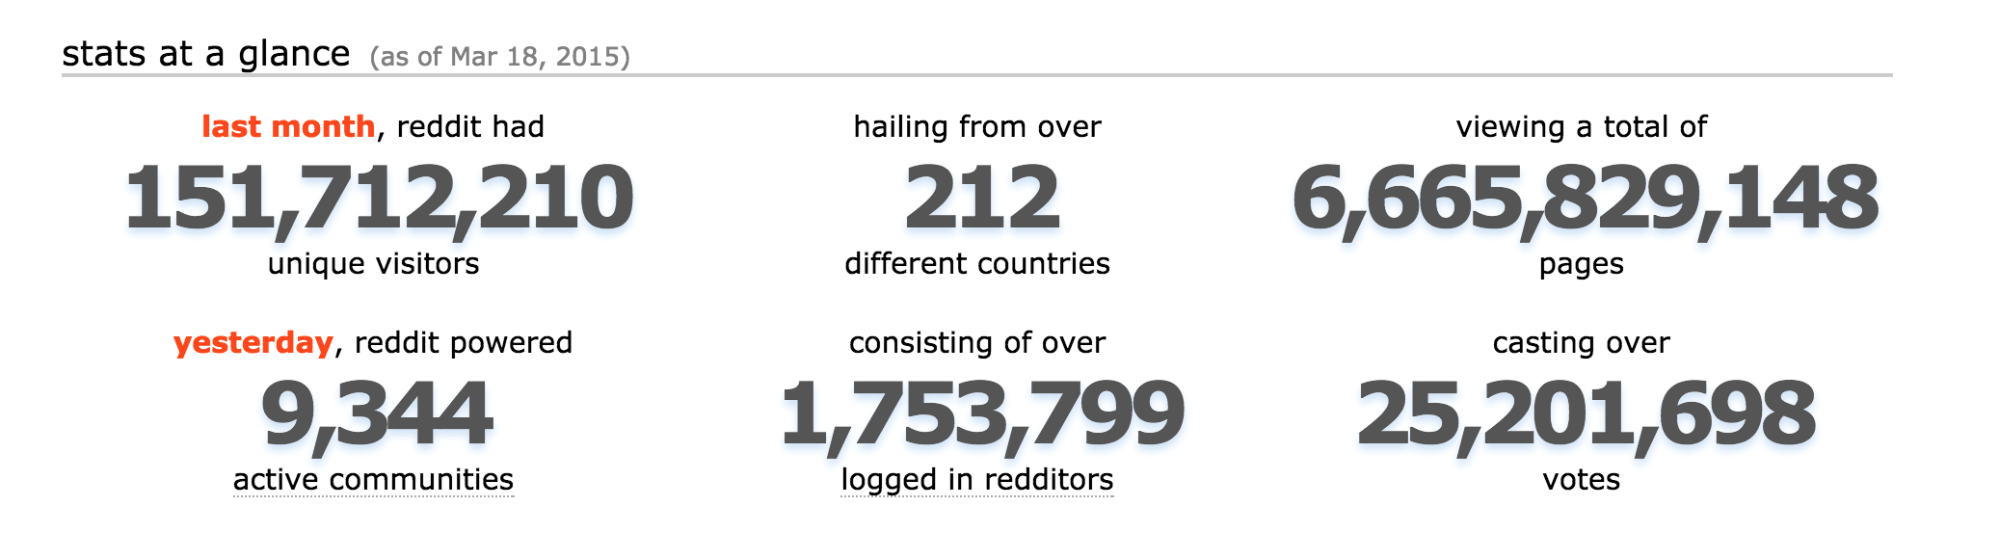 reddit stats